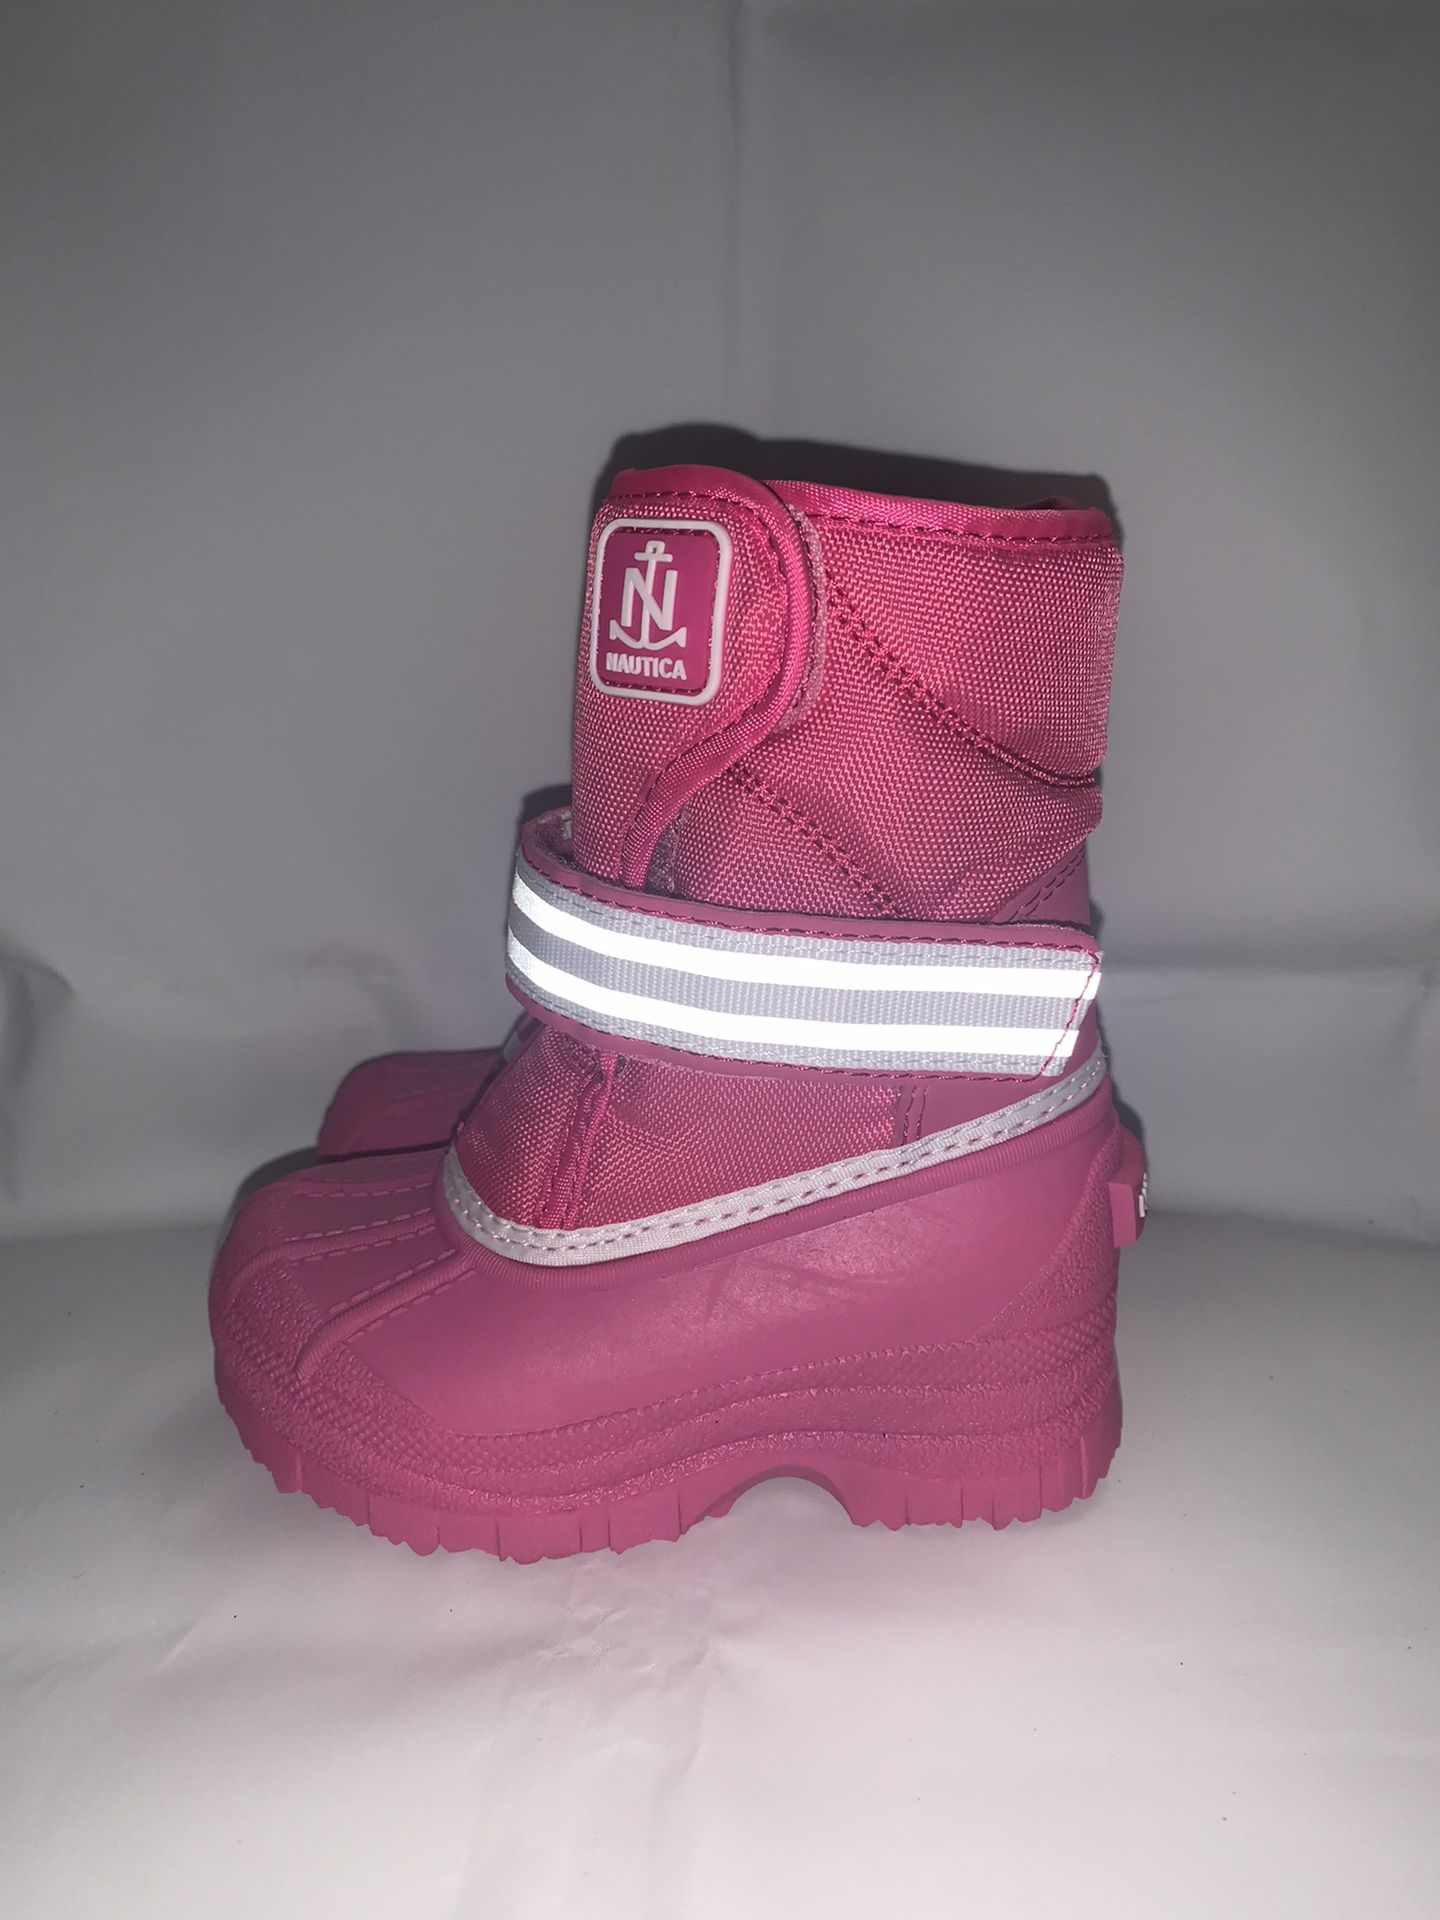 Nautica NS-83 Albermarle Kids Snow Rain Toddler Boots Pink & White